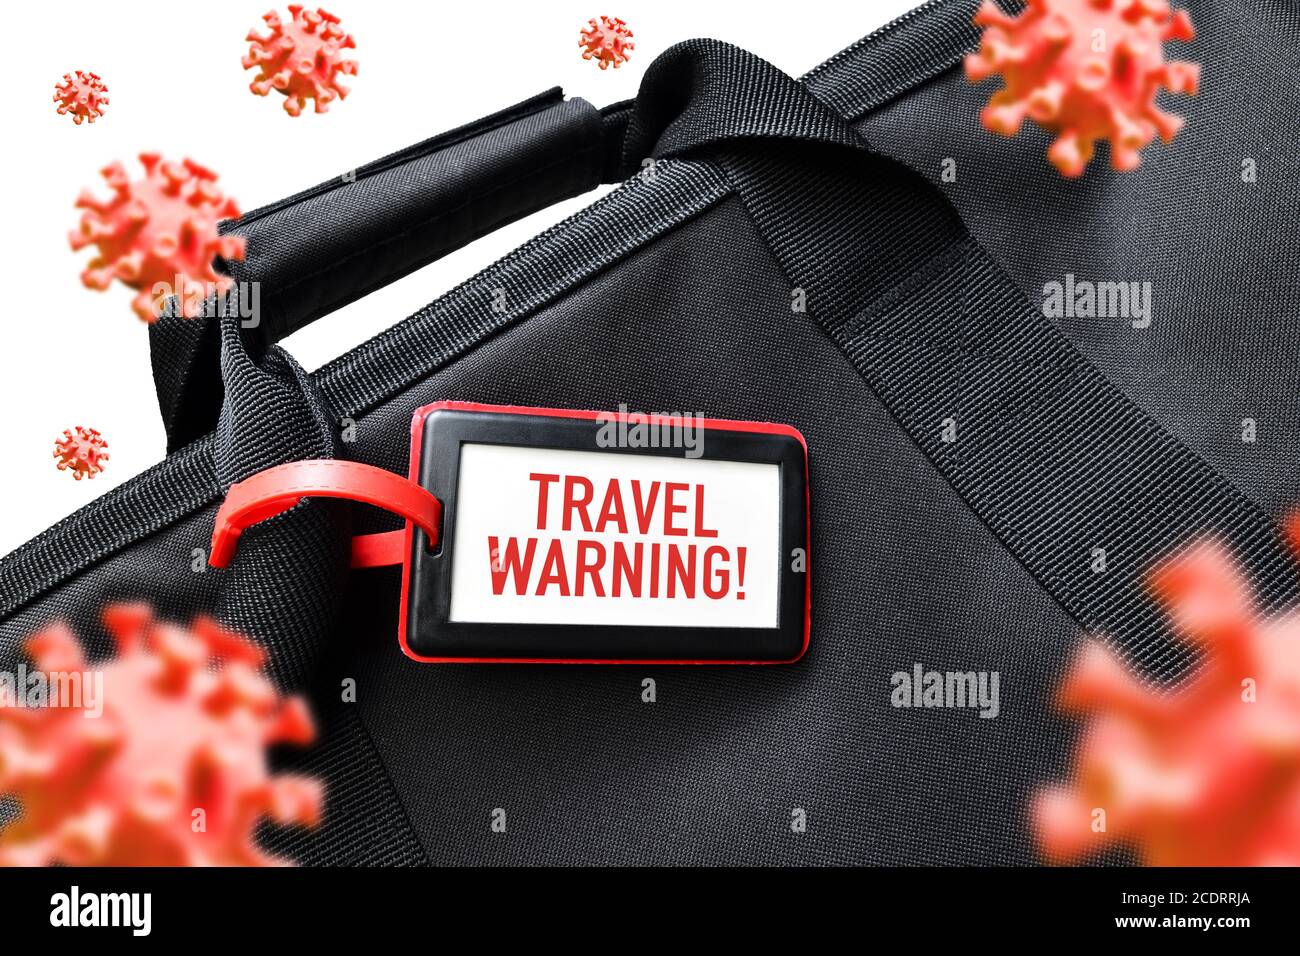 Travel bag and address tag, COVID-19 travel warning Stock Photo